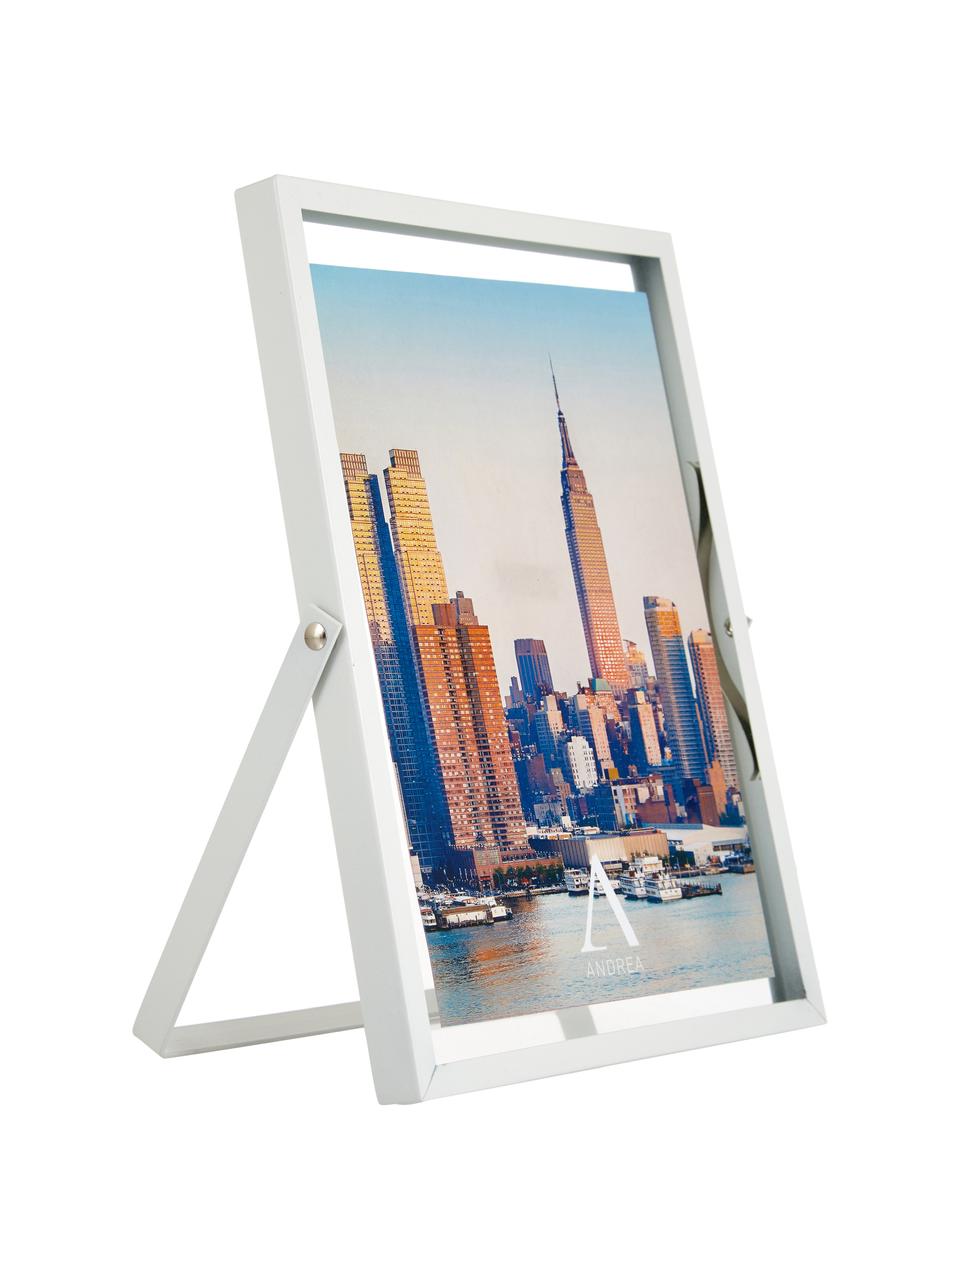 Bilderrahmen Marco, Rahmen: Metall, Front: Glas, Weiss, 15 x 20 cm